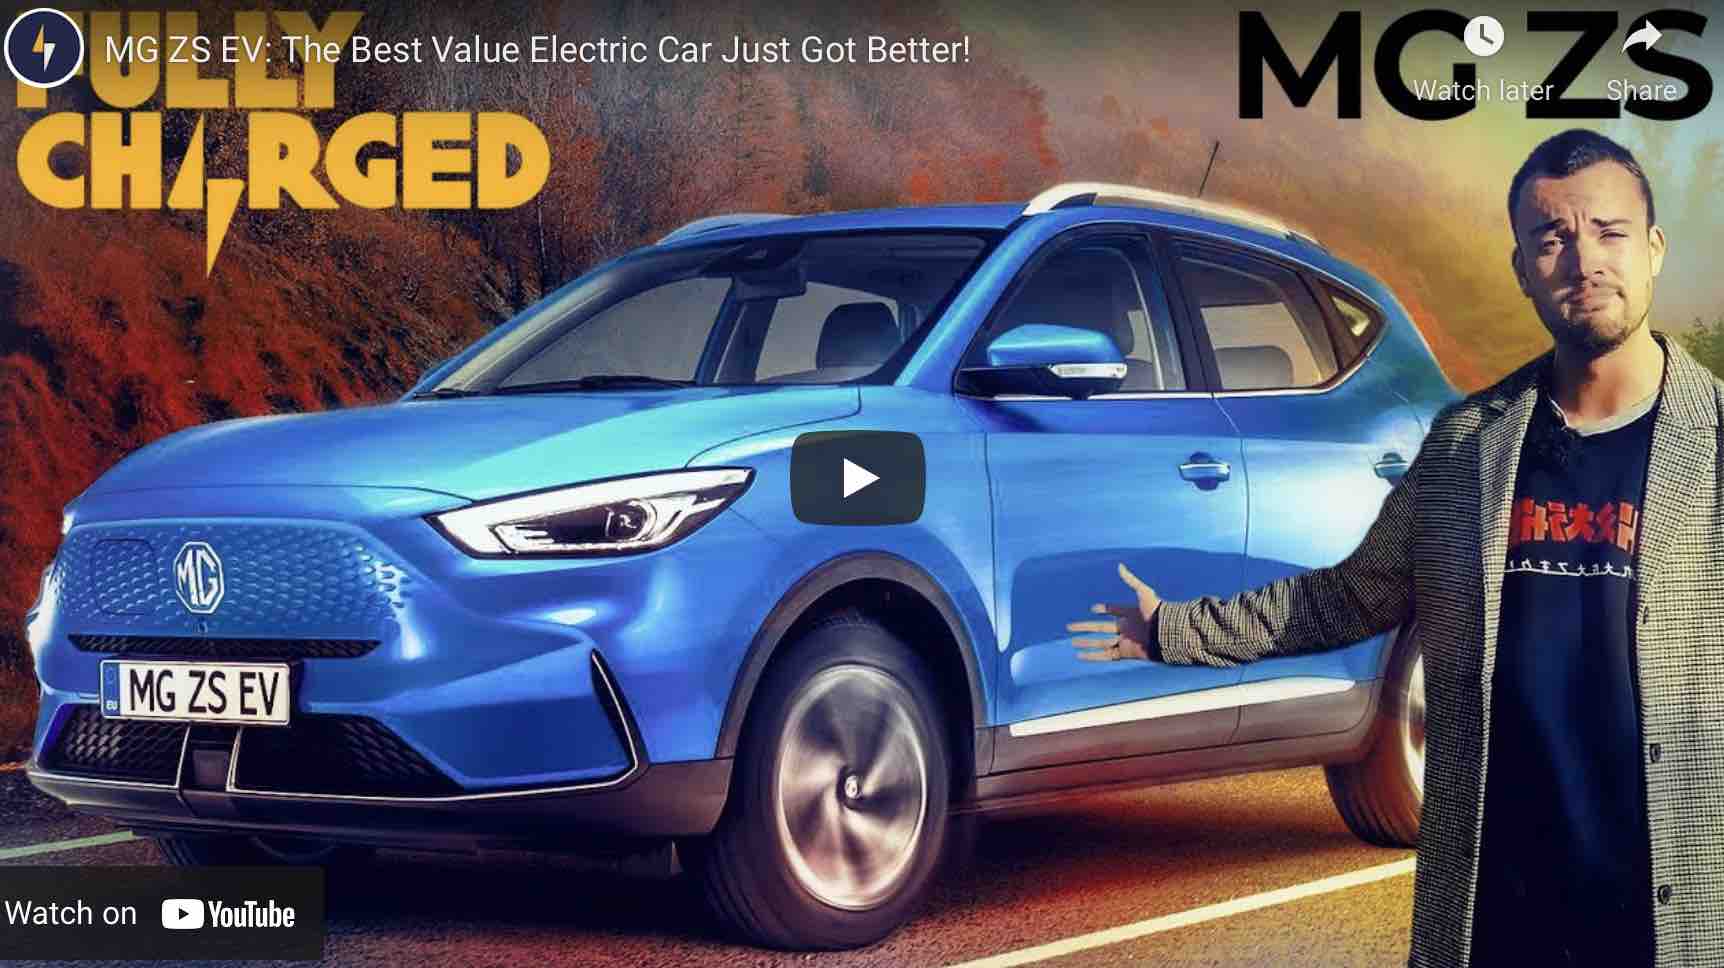 MG ZS EV, Latest Electric Cars